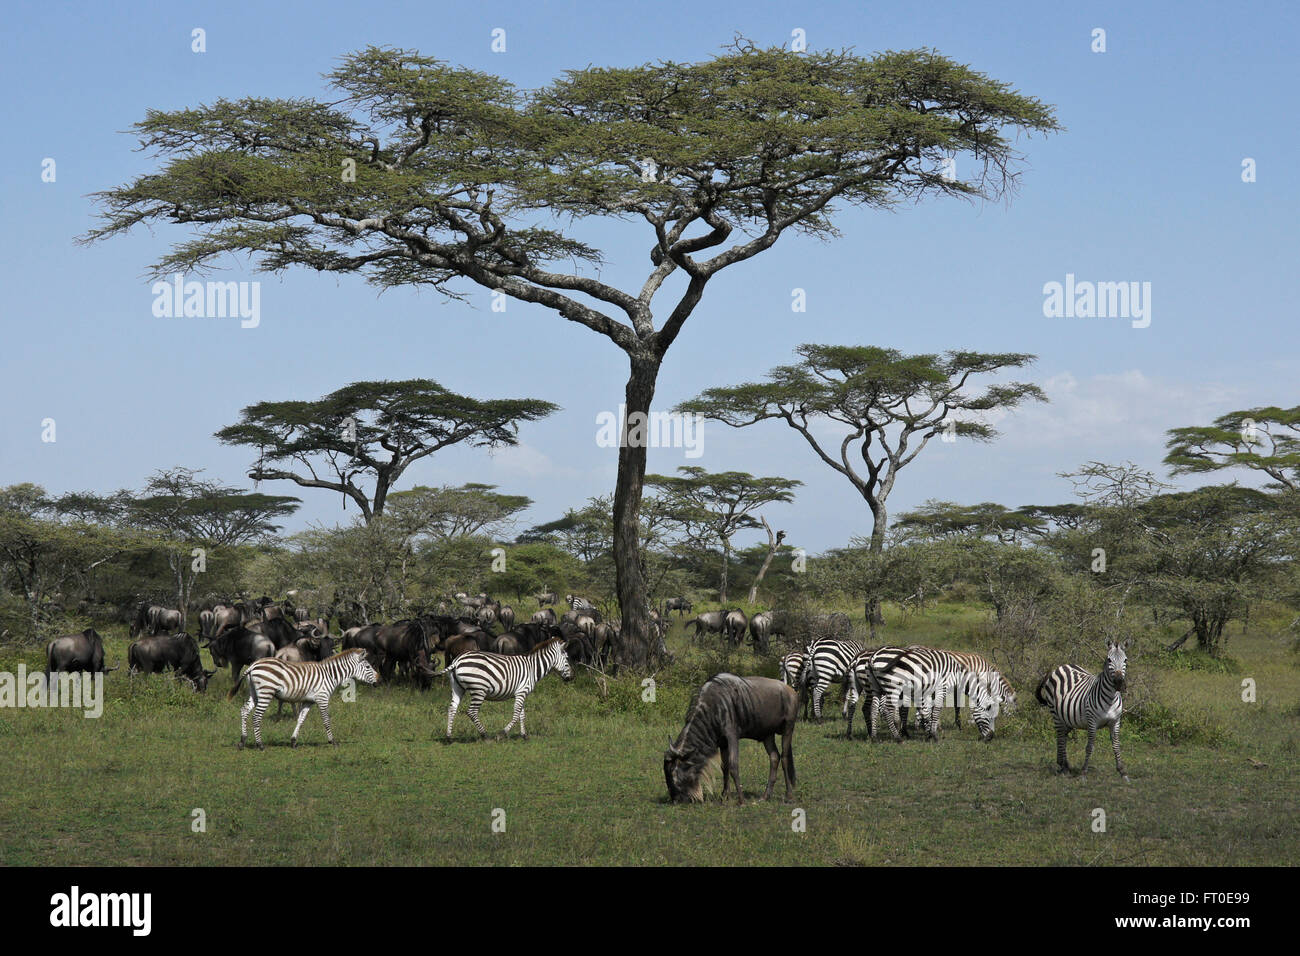 Common zebras and wildebeests grazing among acacia trees, Ngorongoro Conservation Area (Ndutu), Tanzania Stock Photo